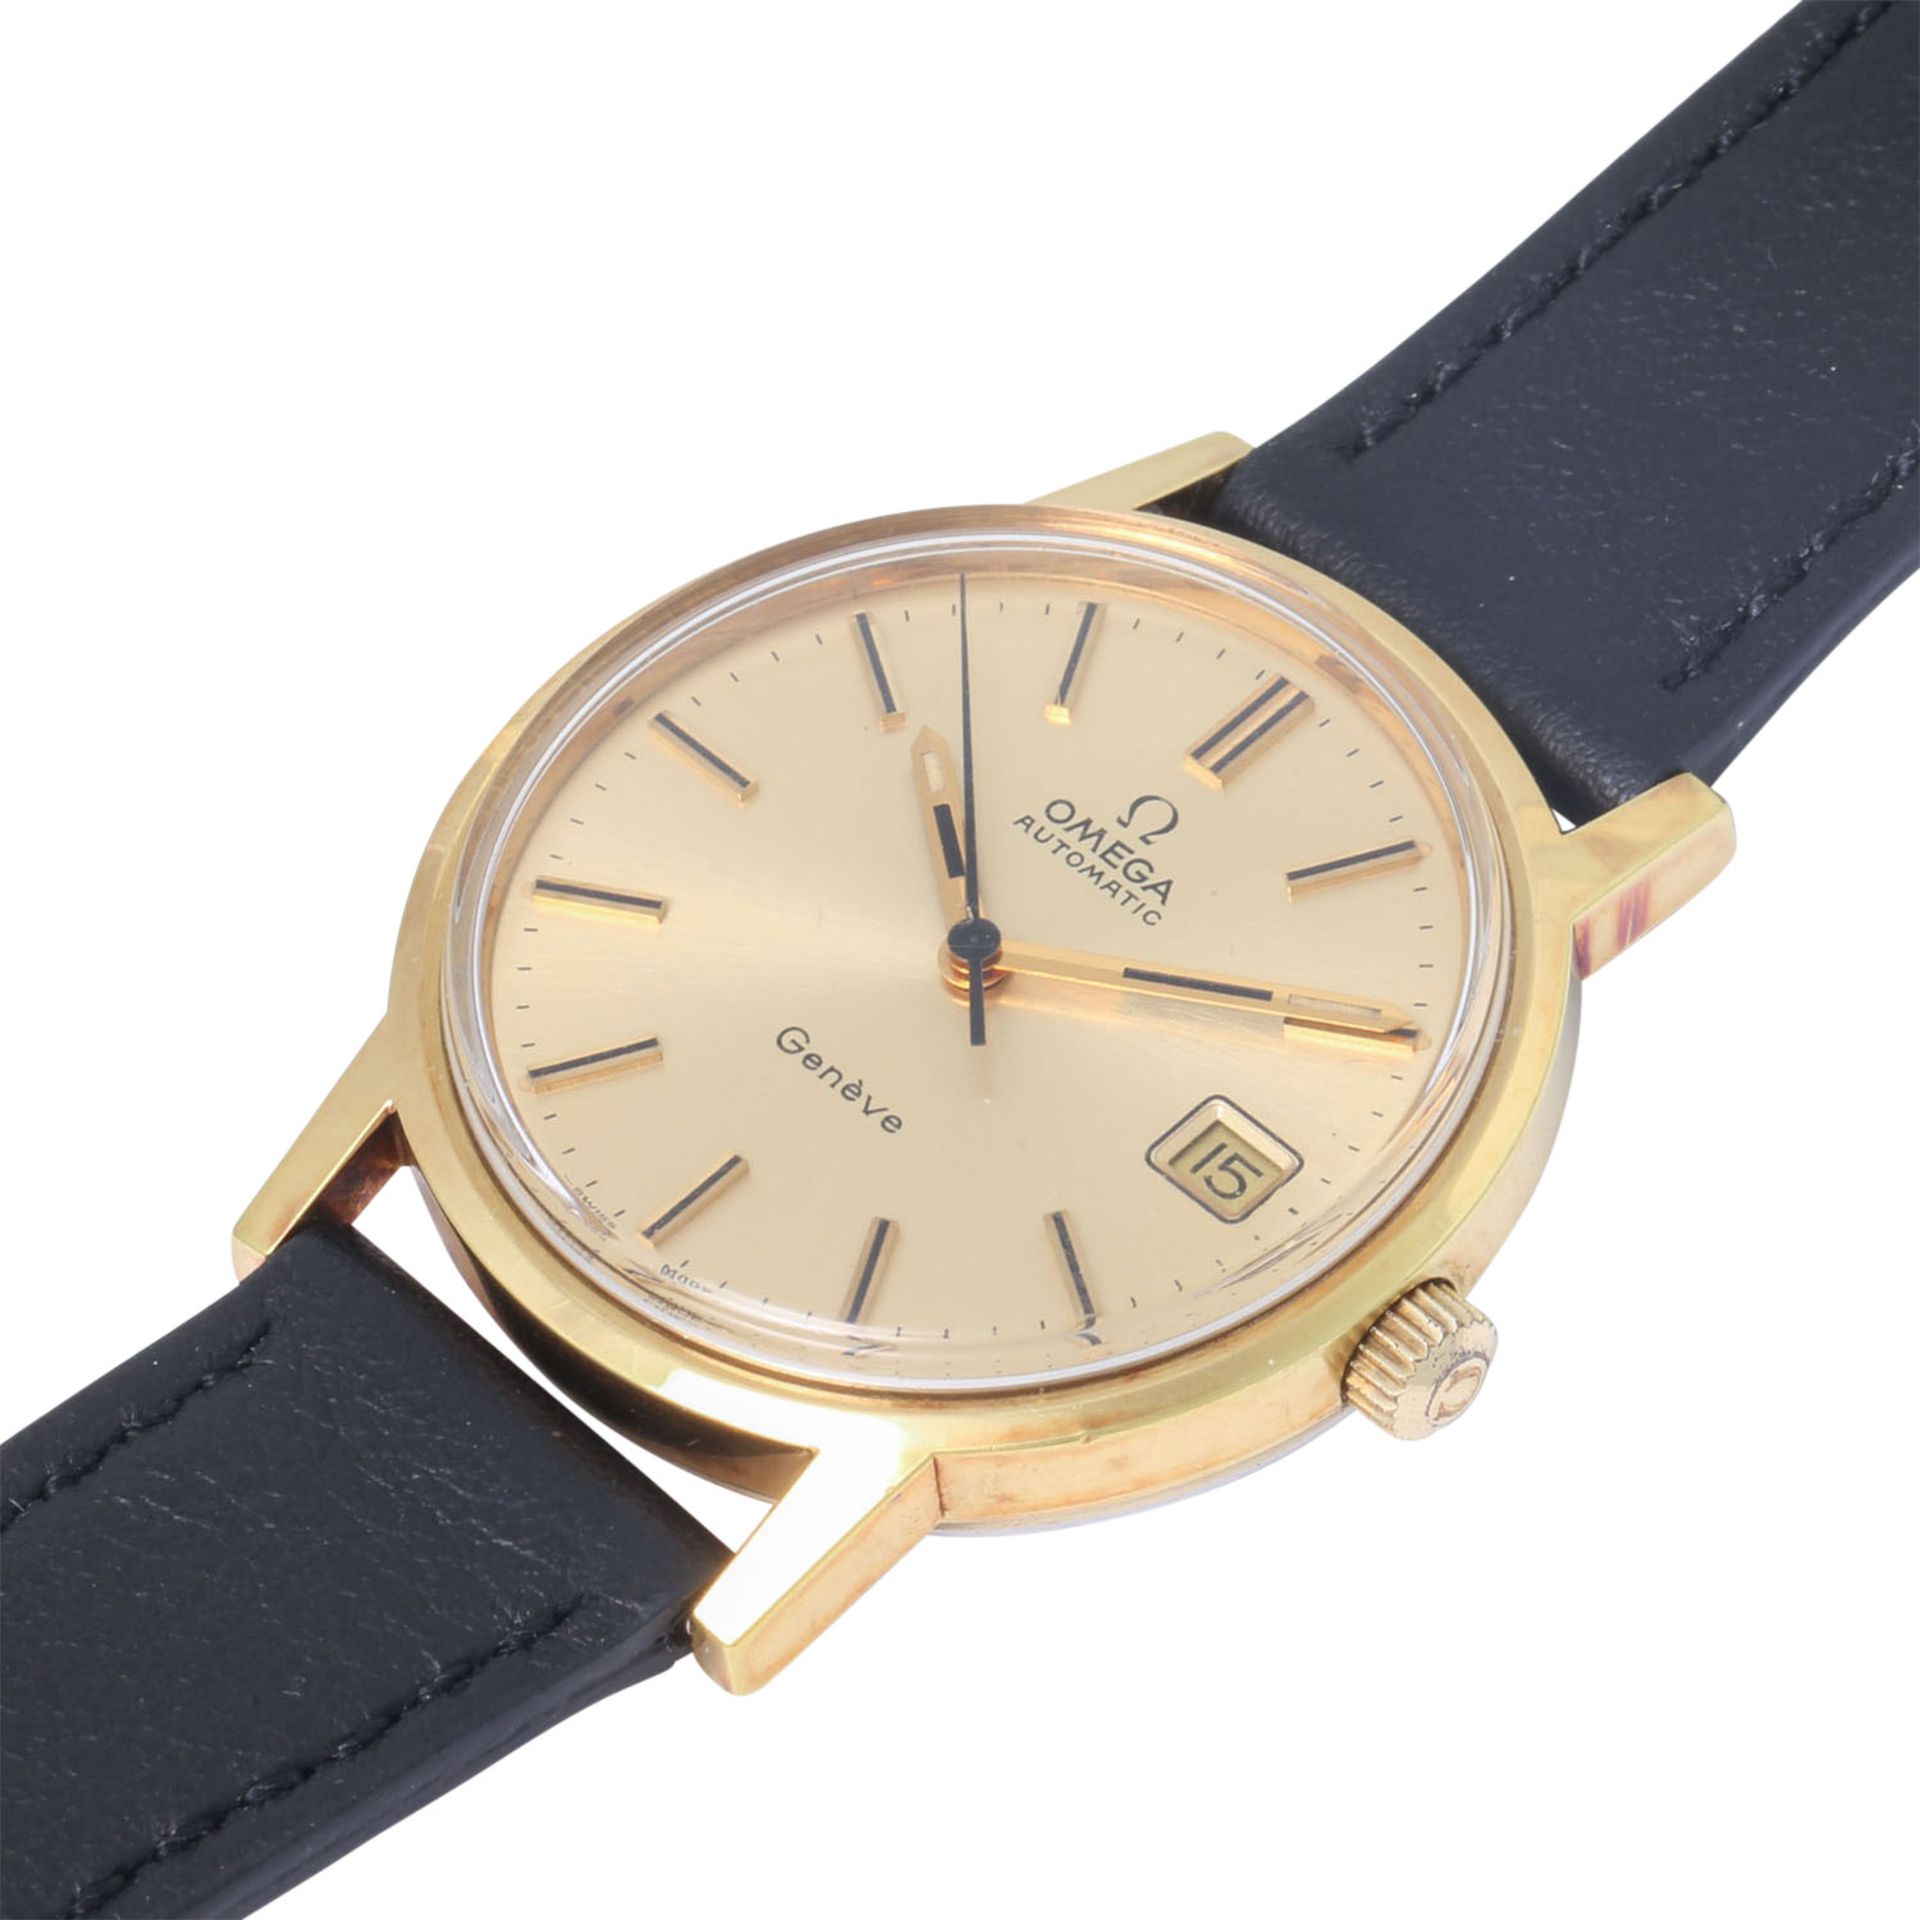 OMEGA Geneve Vintage Armbanduhr, Ref. 166.0163. Ca. 1970er Jahre. - Bild 5 aus 7